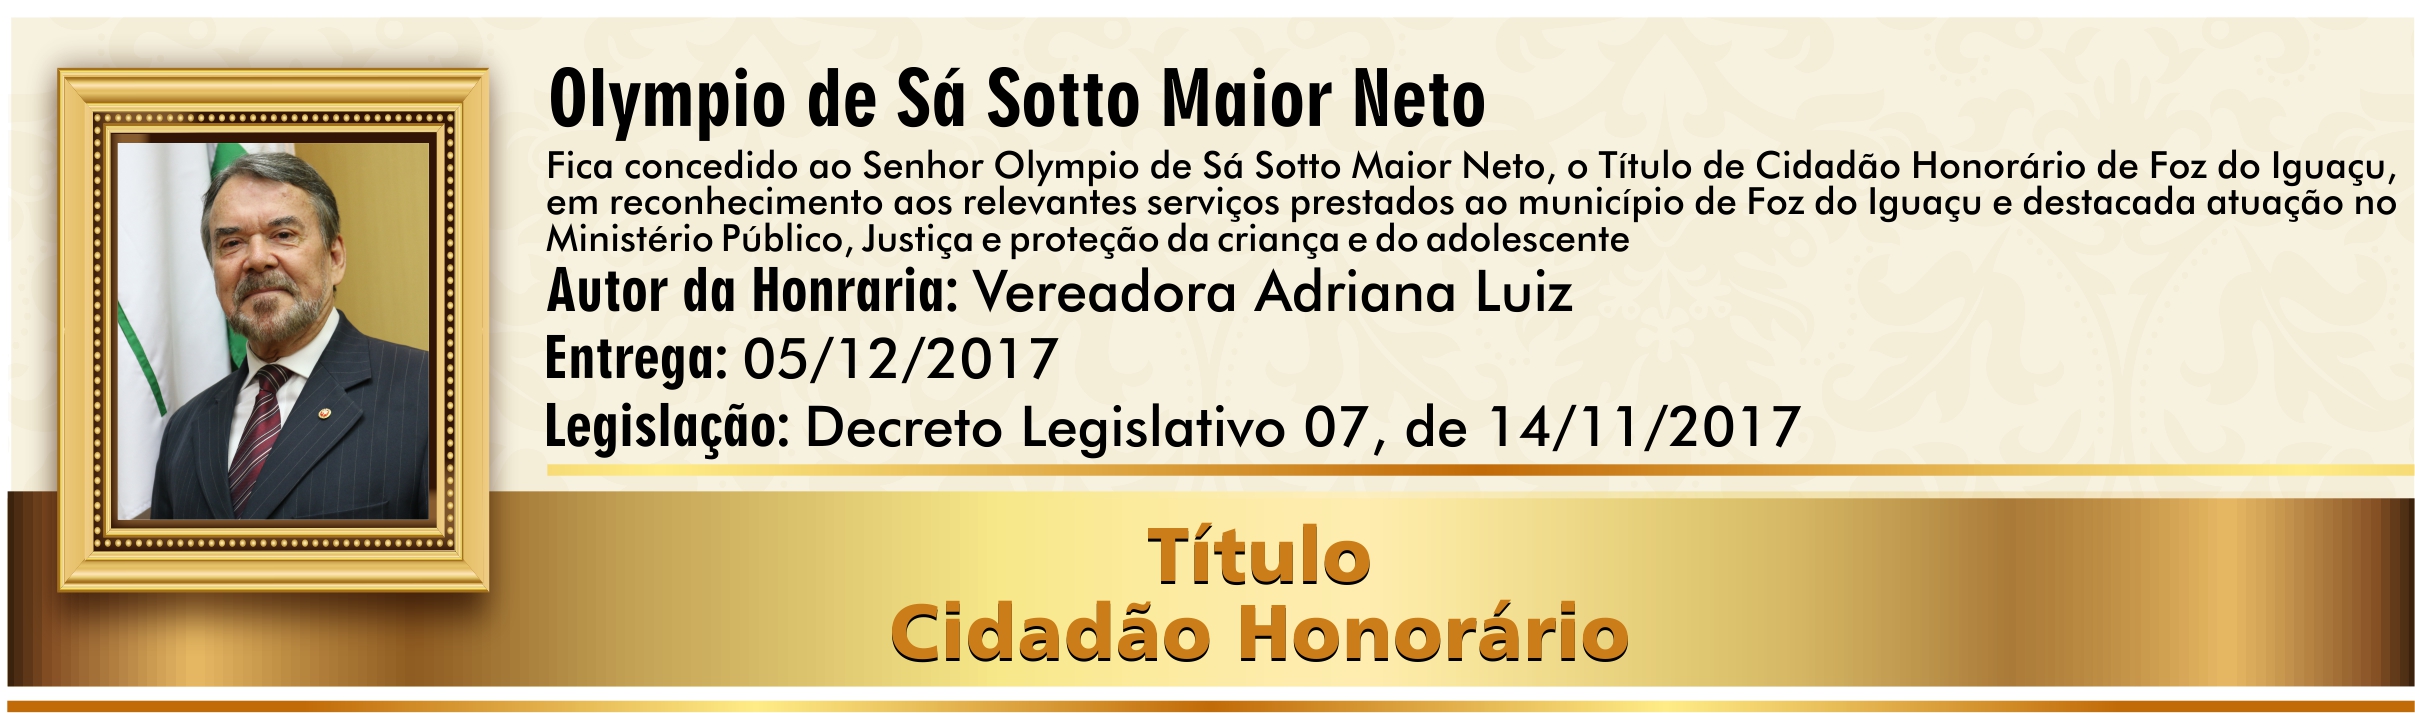 Olympio de Sá sotto Maior Neto